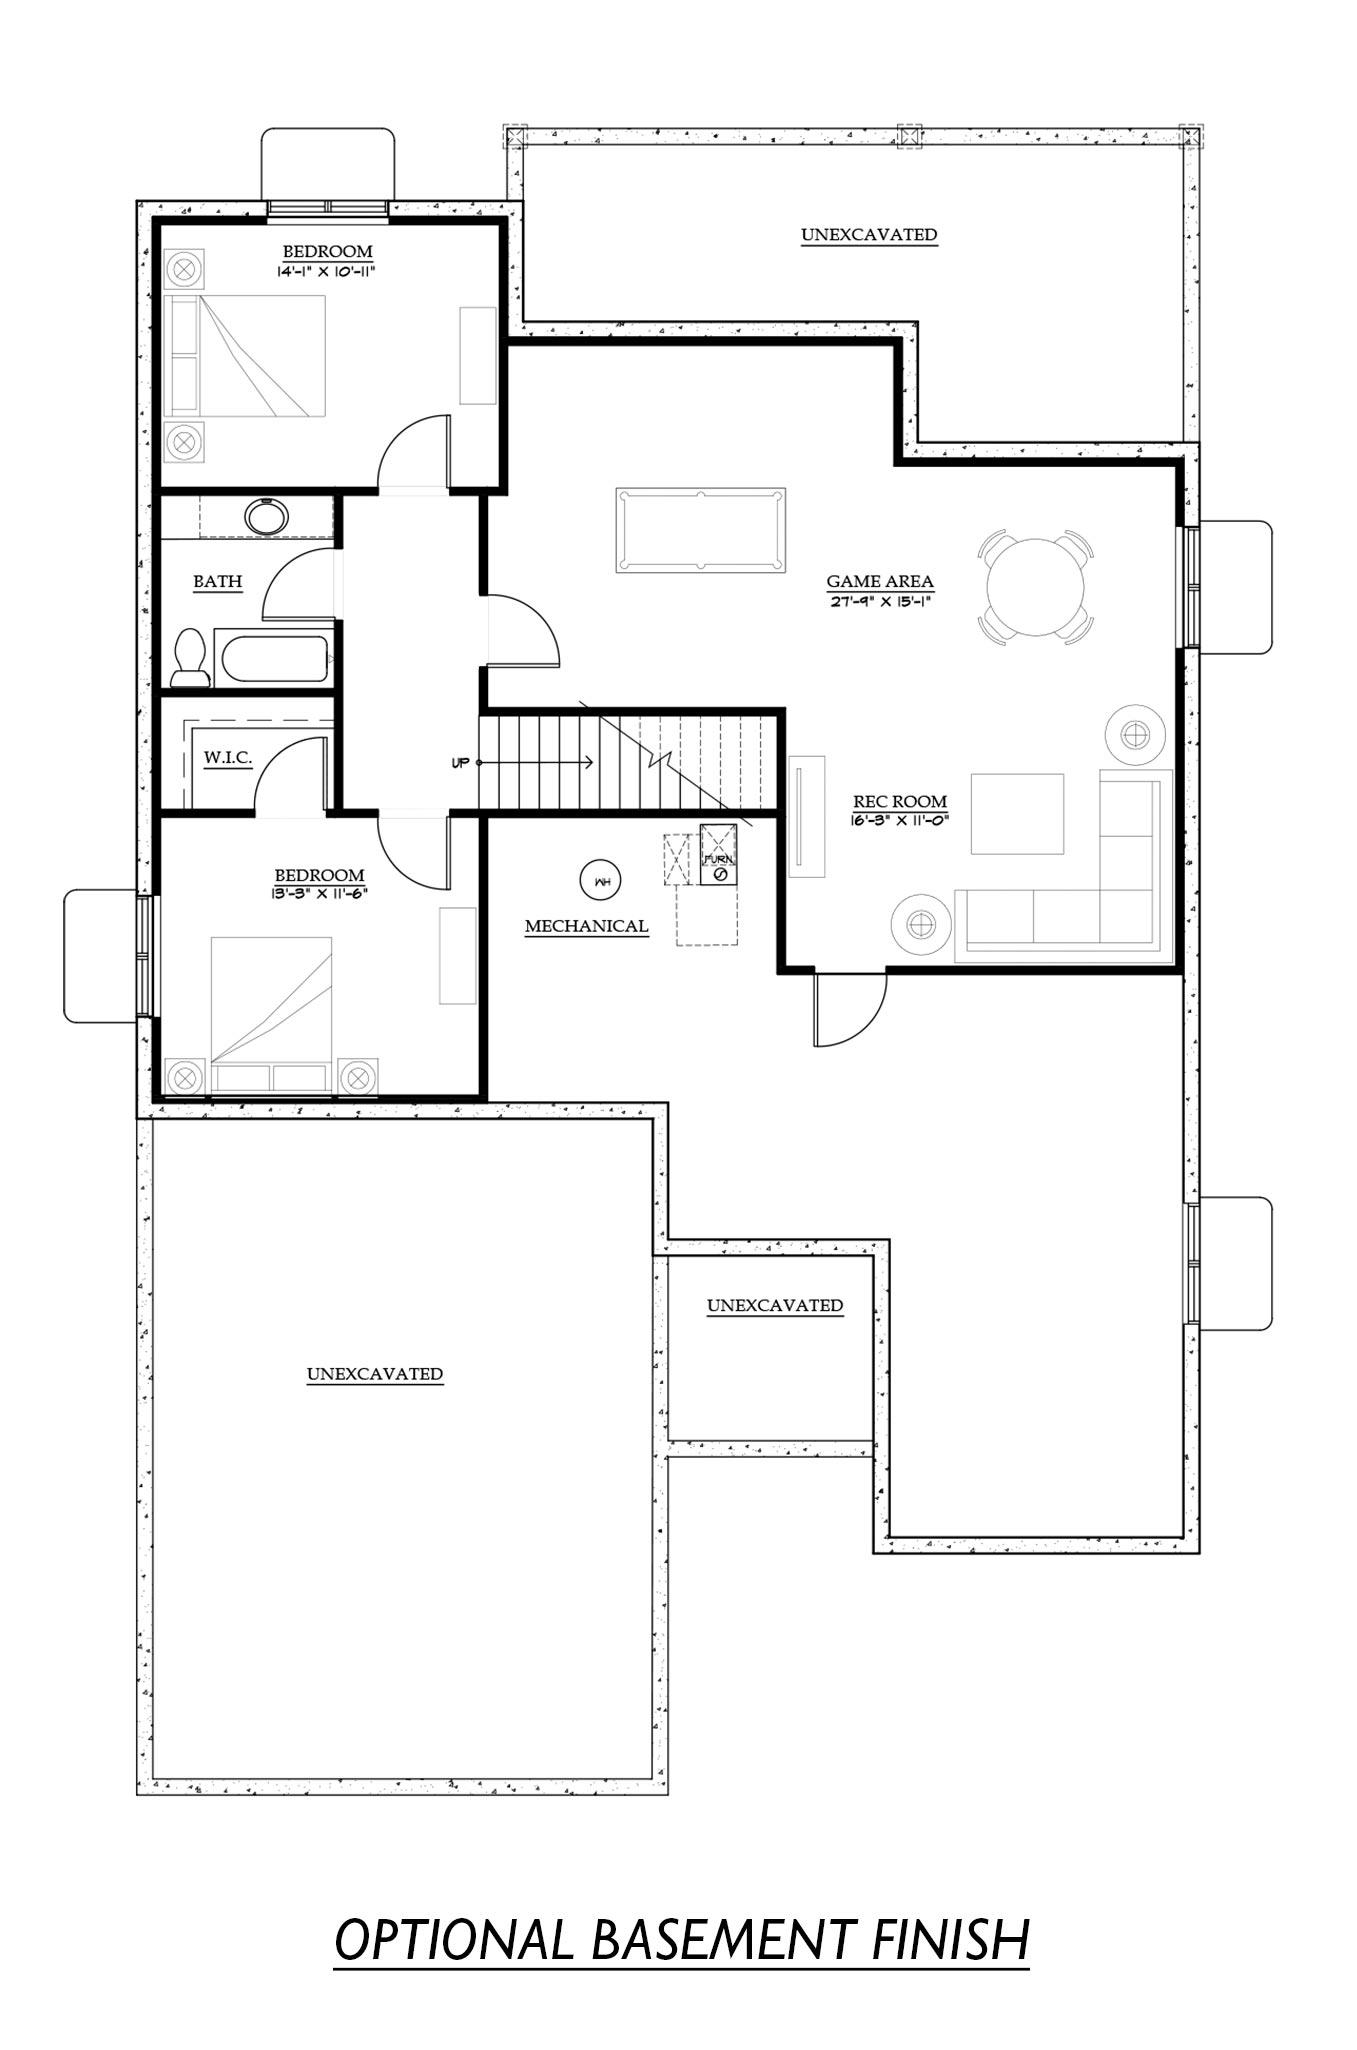 optional basement finish floor plan